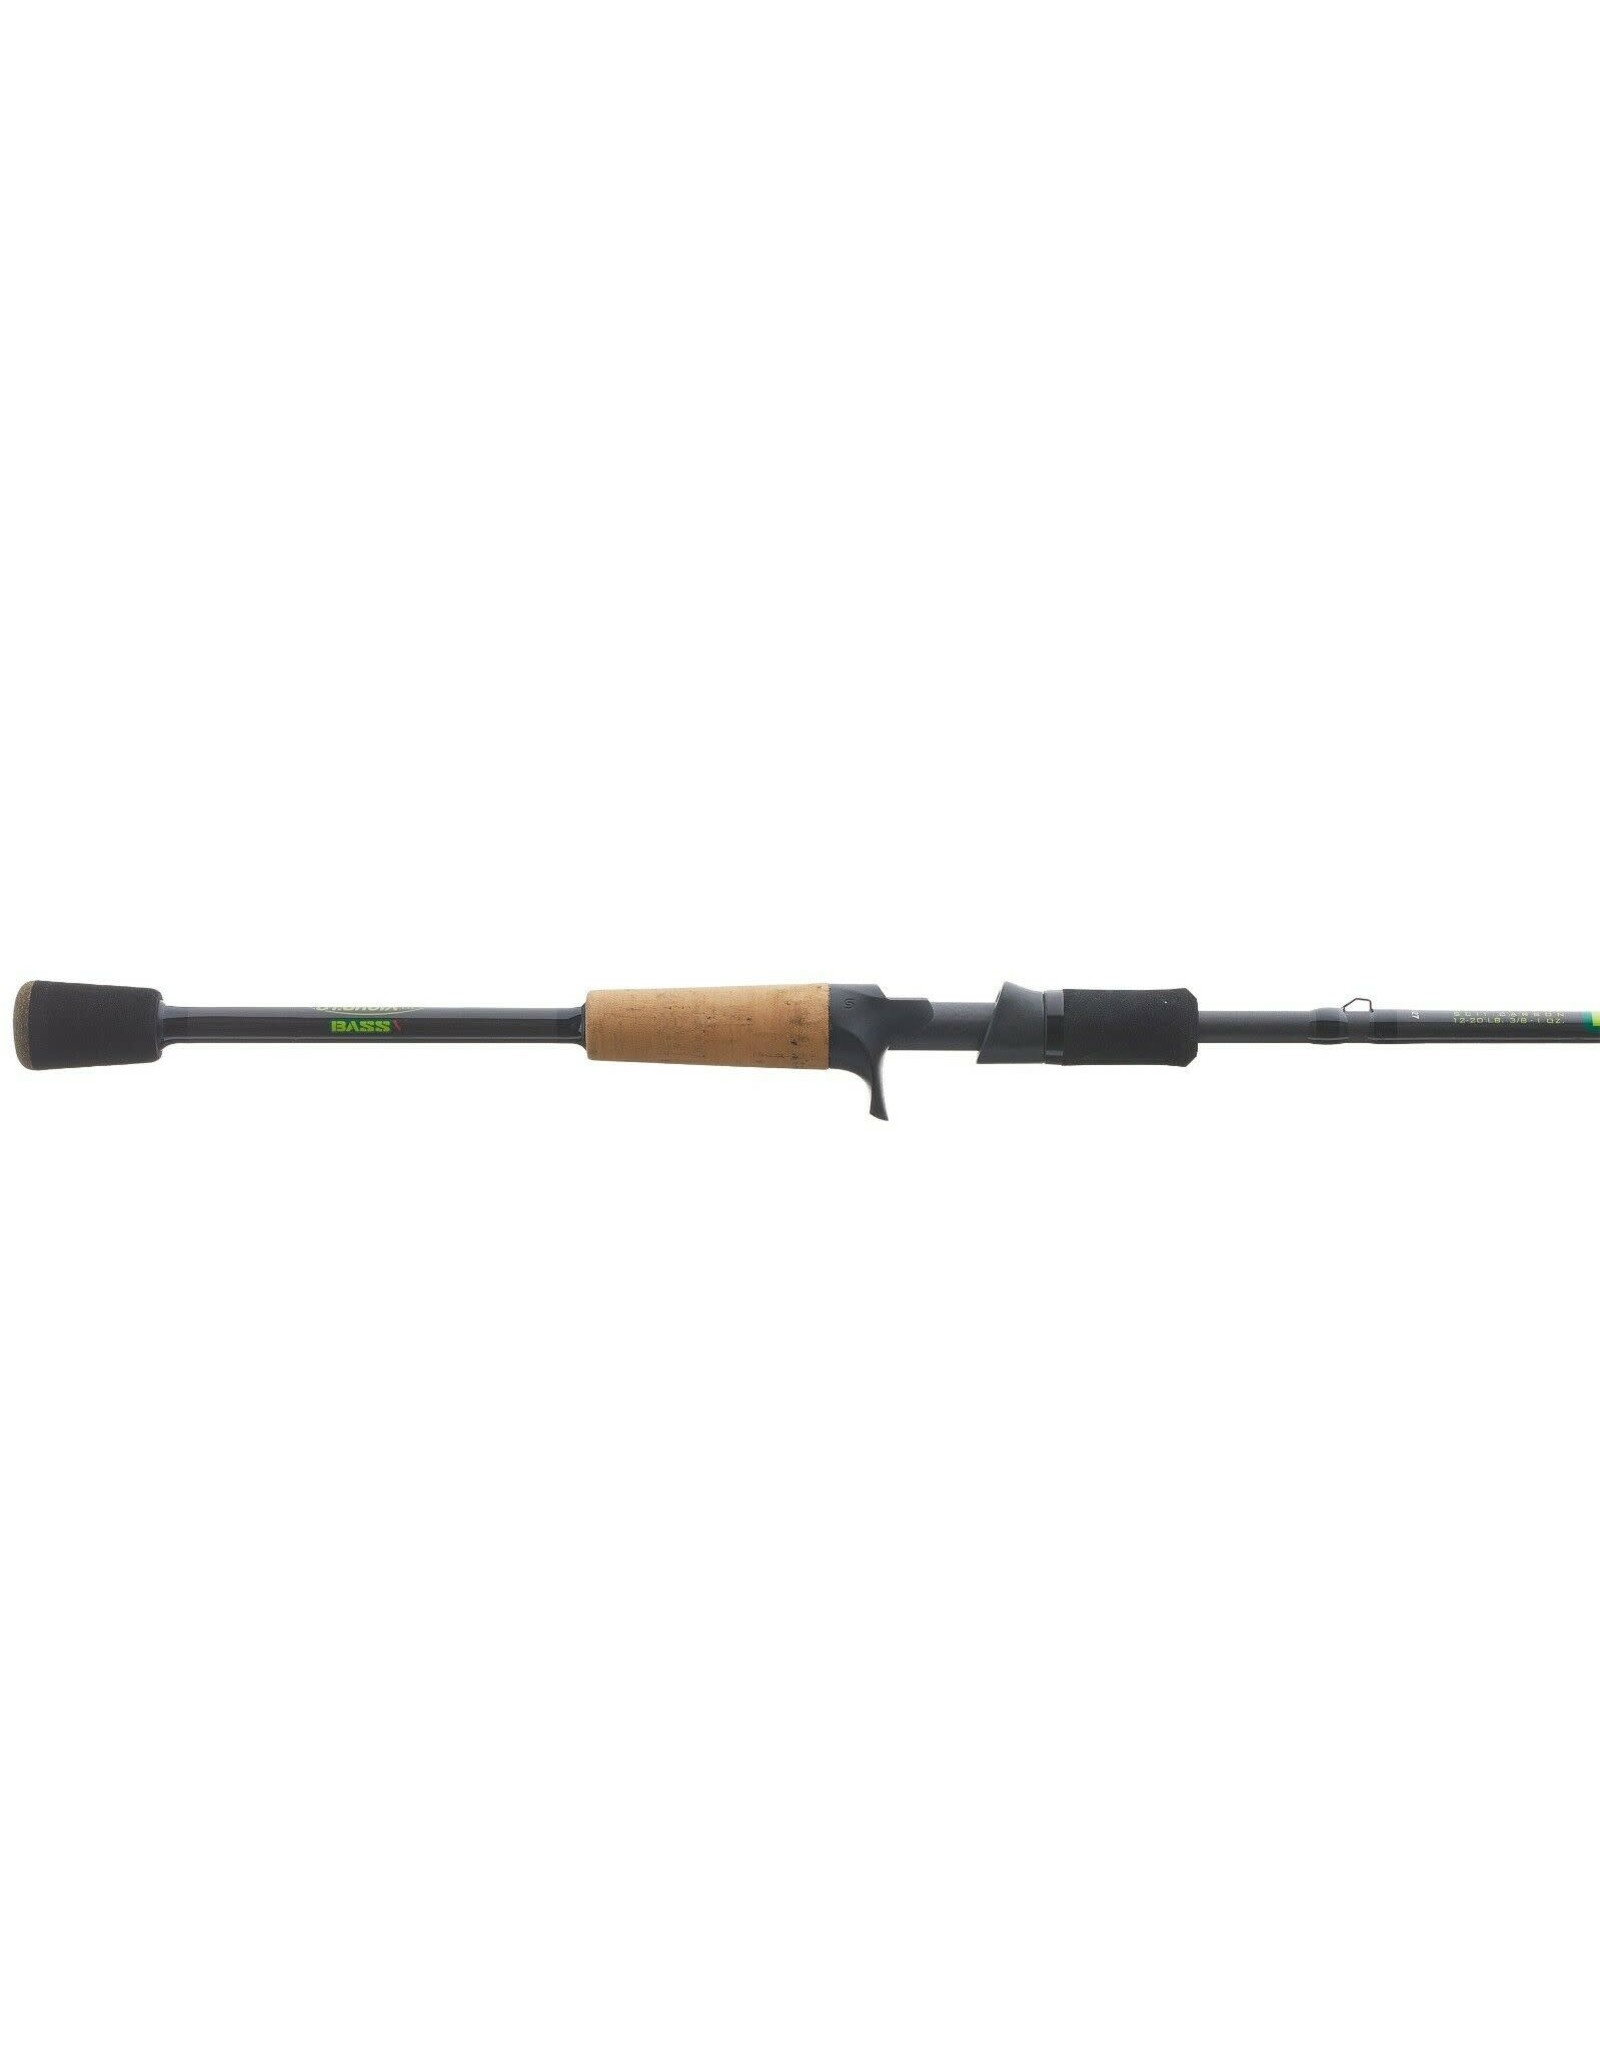 Details about St. Croix Bass X 7'1 Medium Heavy Fast Casting Rod